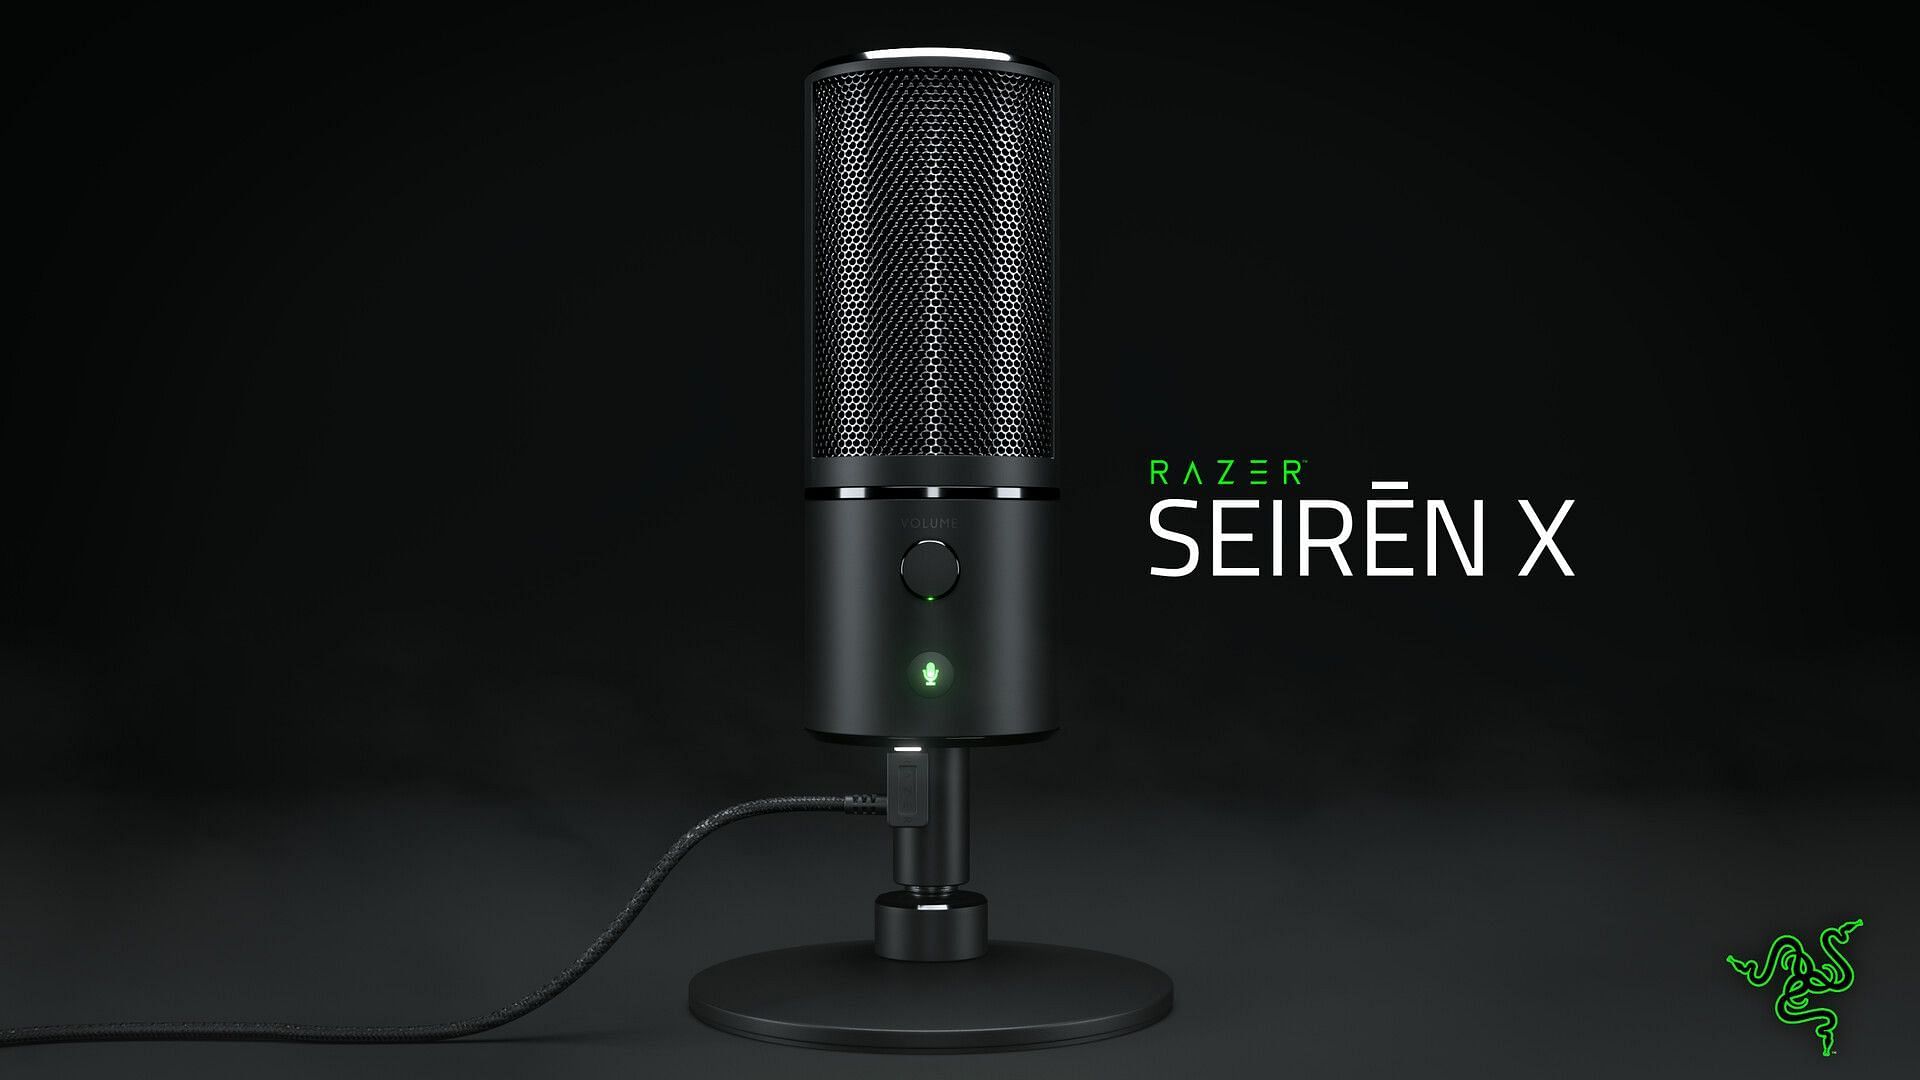 Condenser microphones have superior quality (Image via Razer)